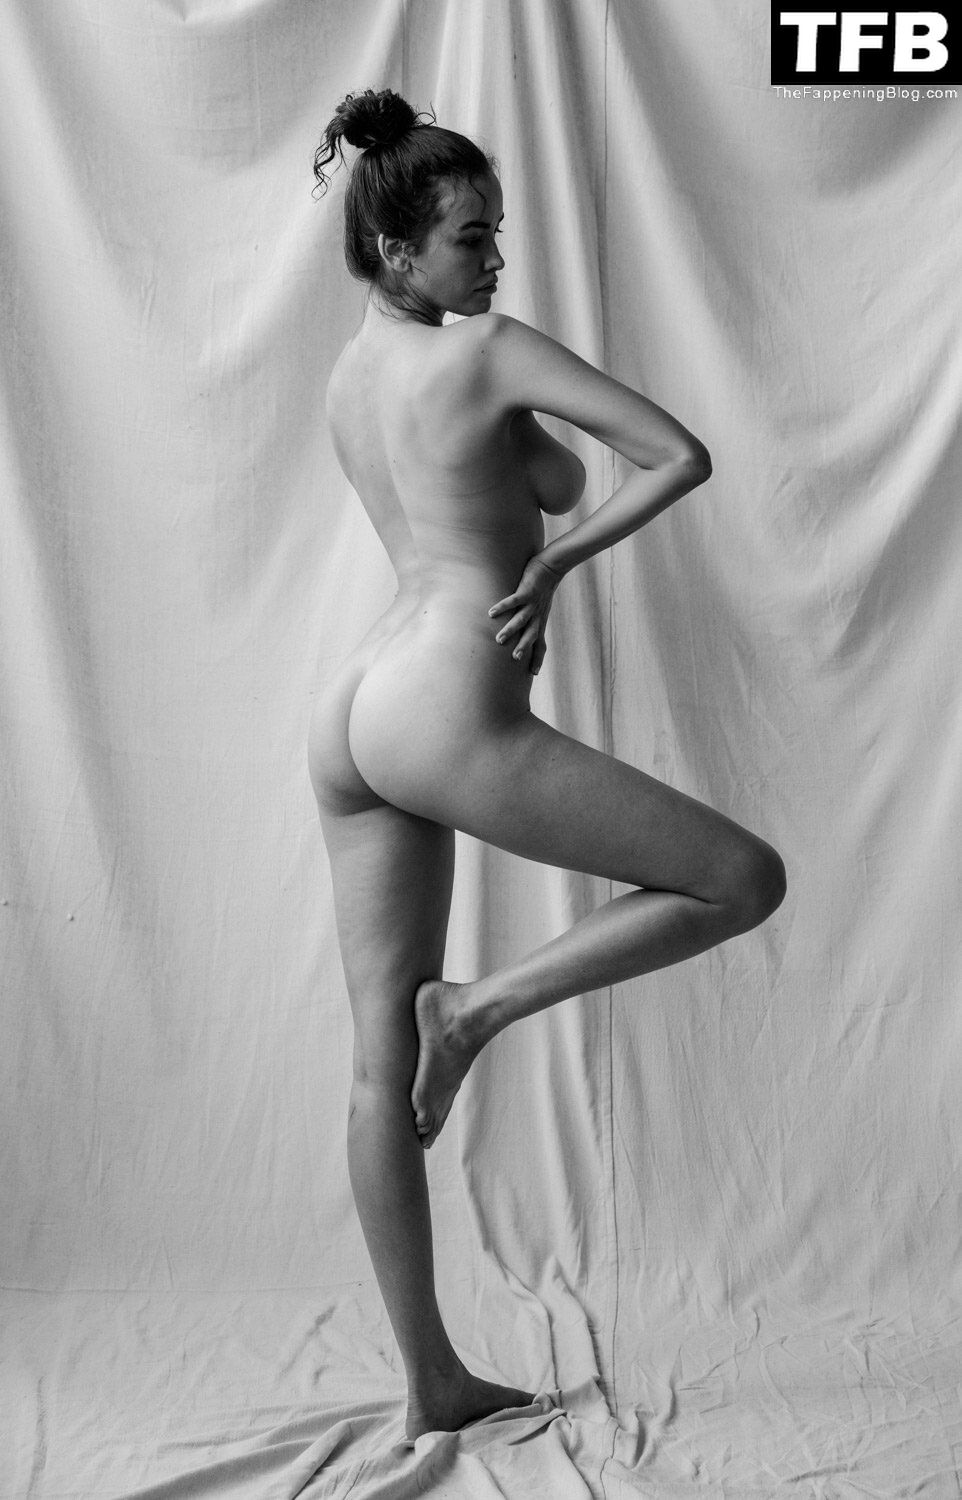 Sarah-Stephens-Nude-The-Fappening-Blog-9.jpg